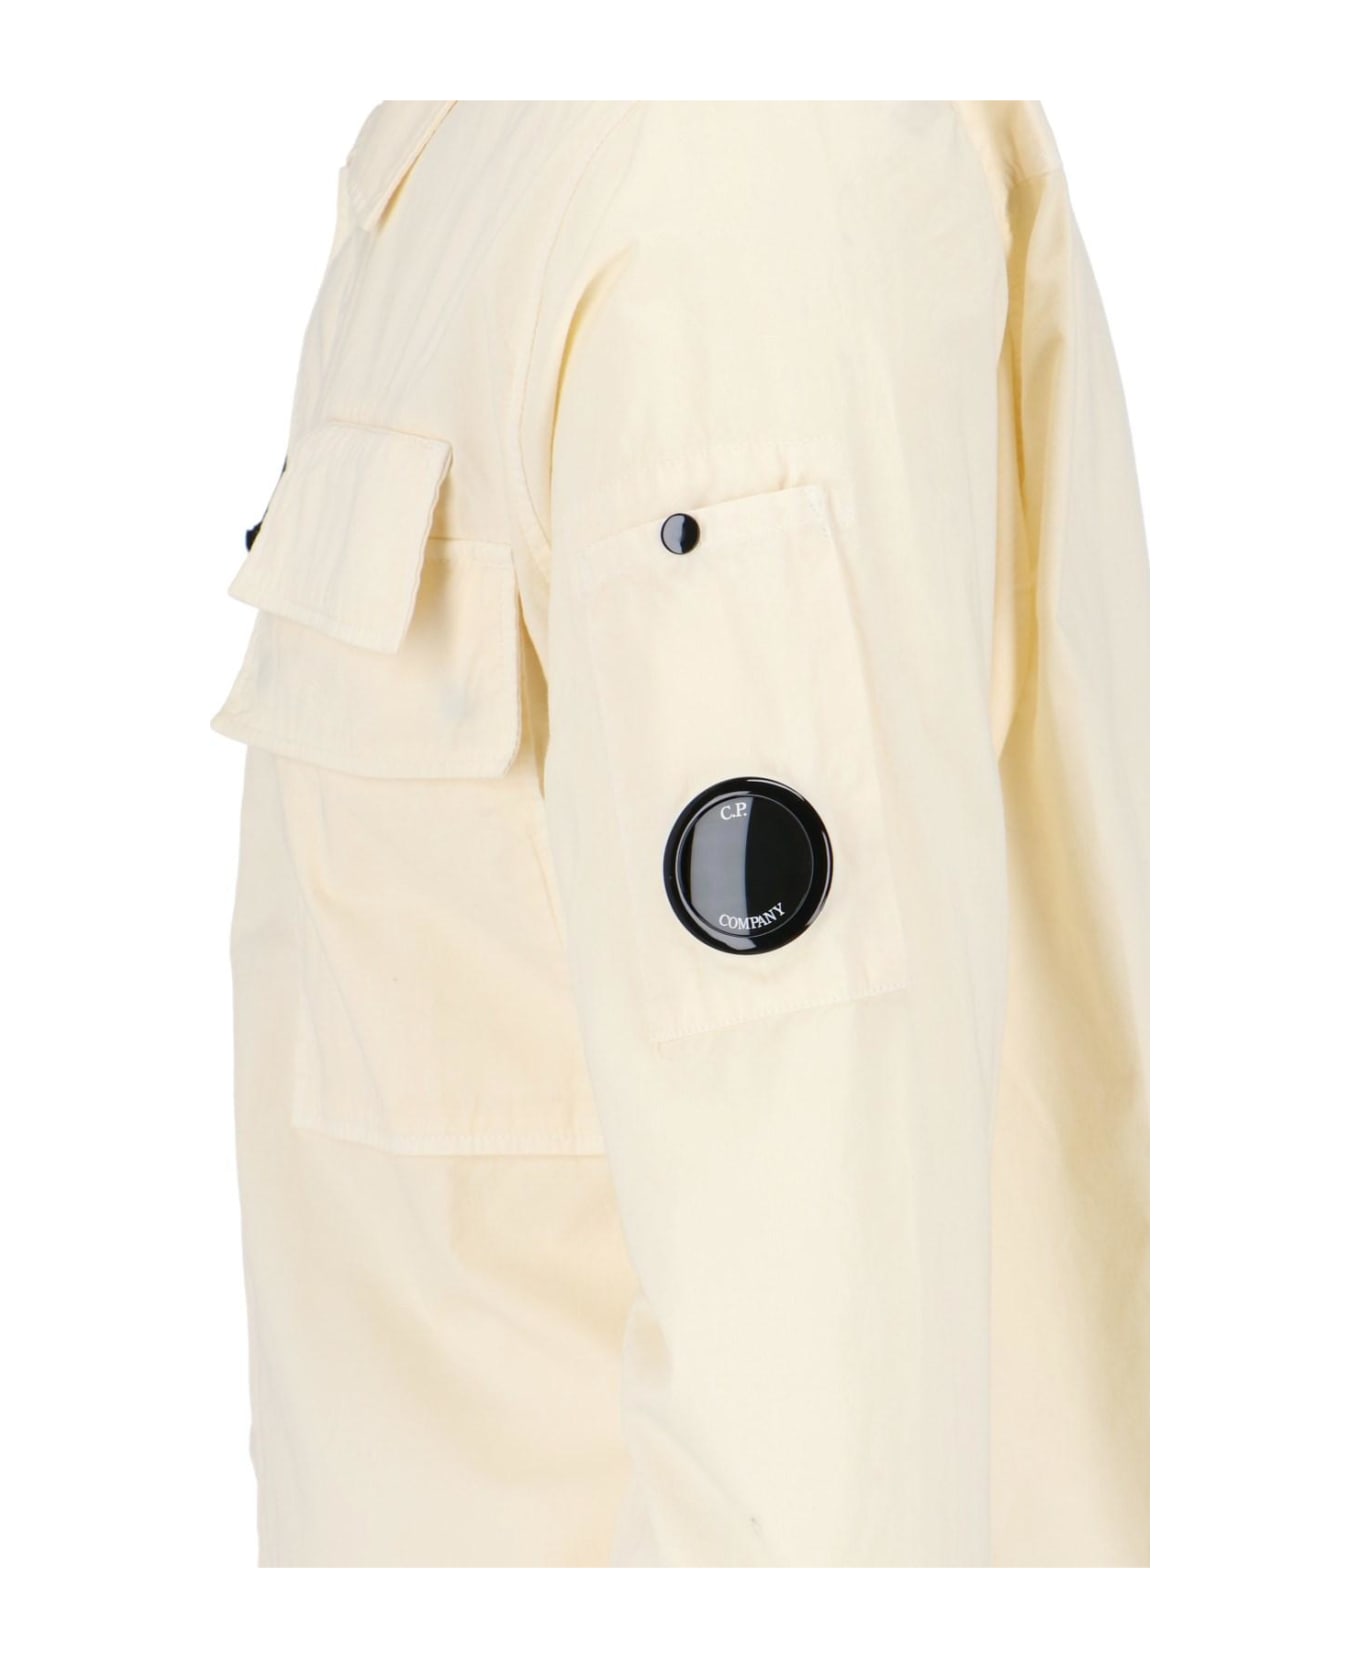 C.P. Company 'lens' Shirt Jacket - Beige